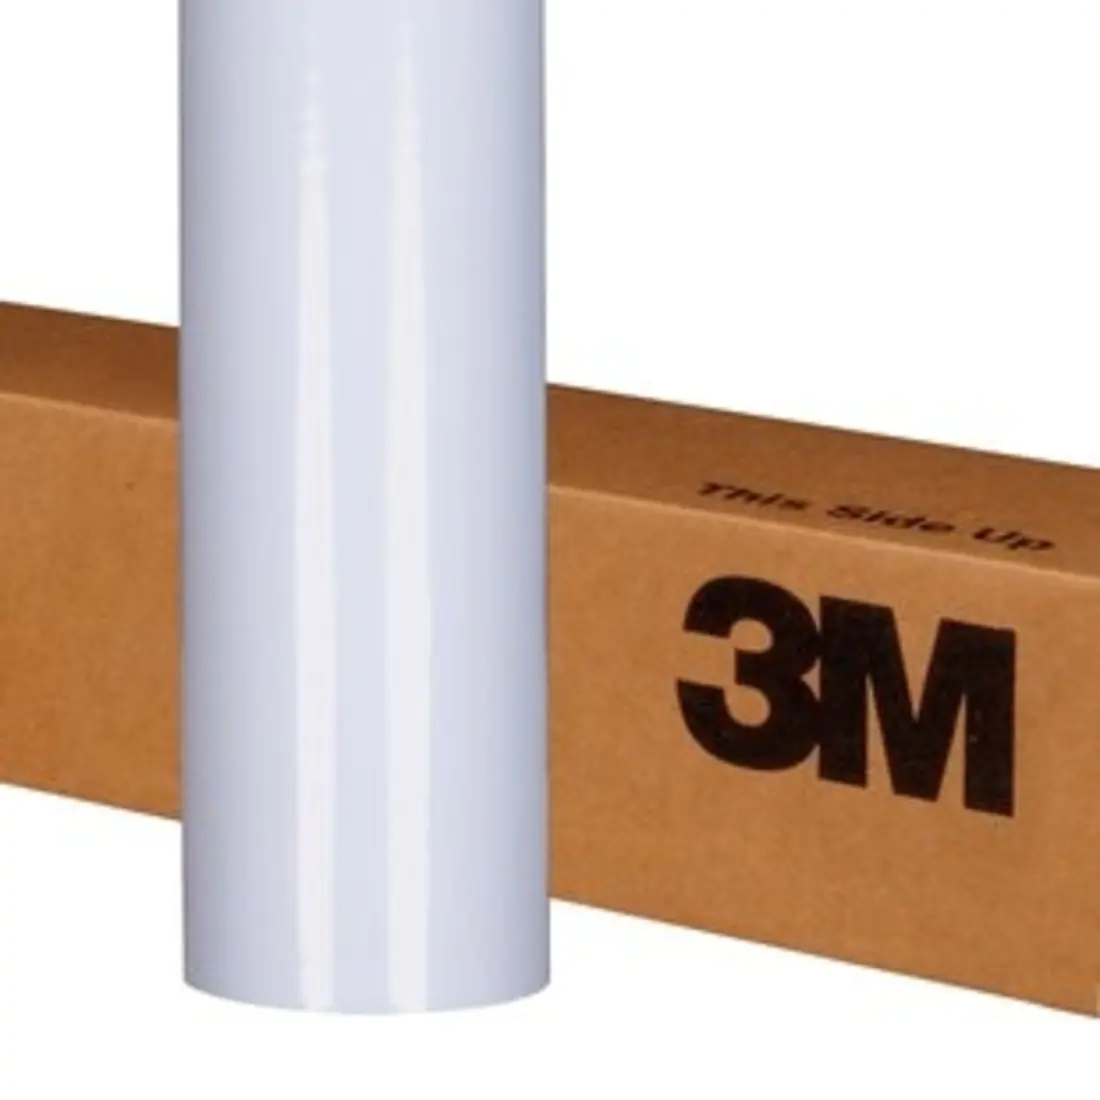 3M box behind a white cylinder